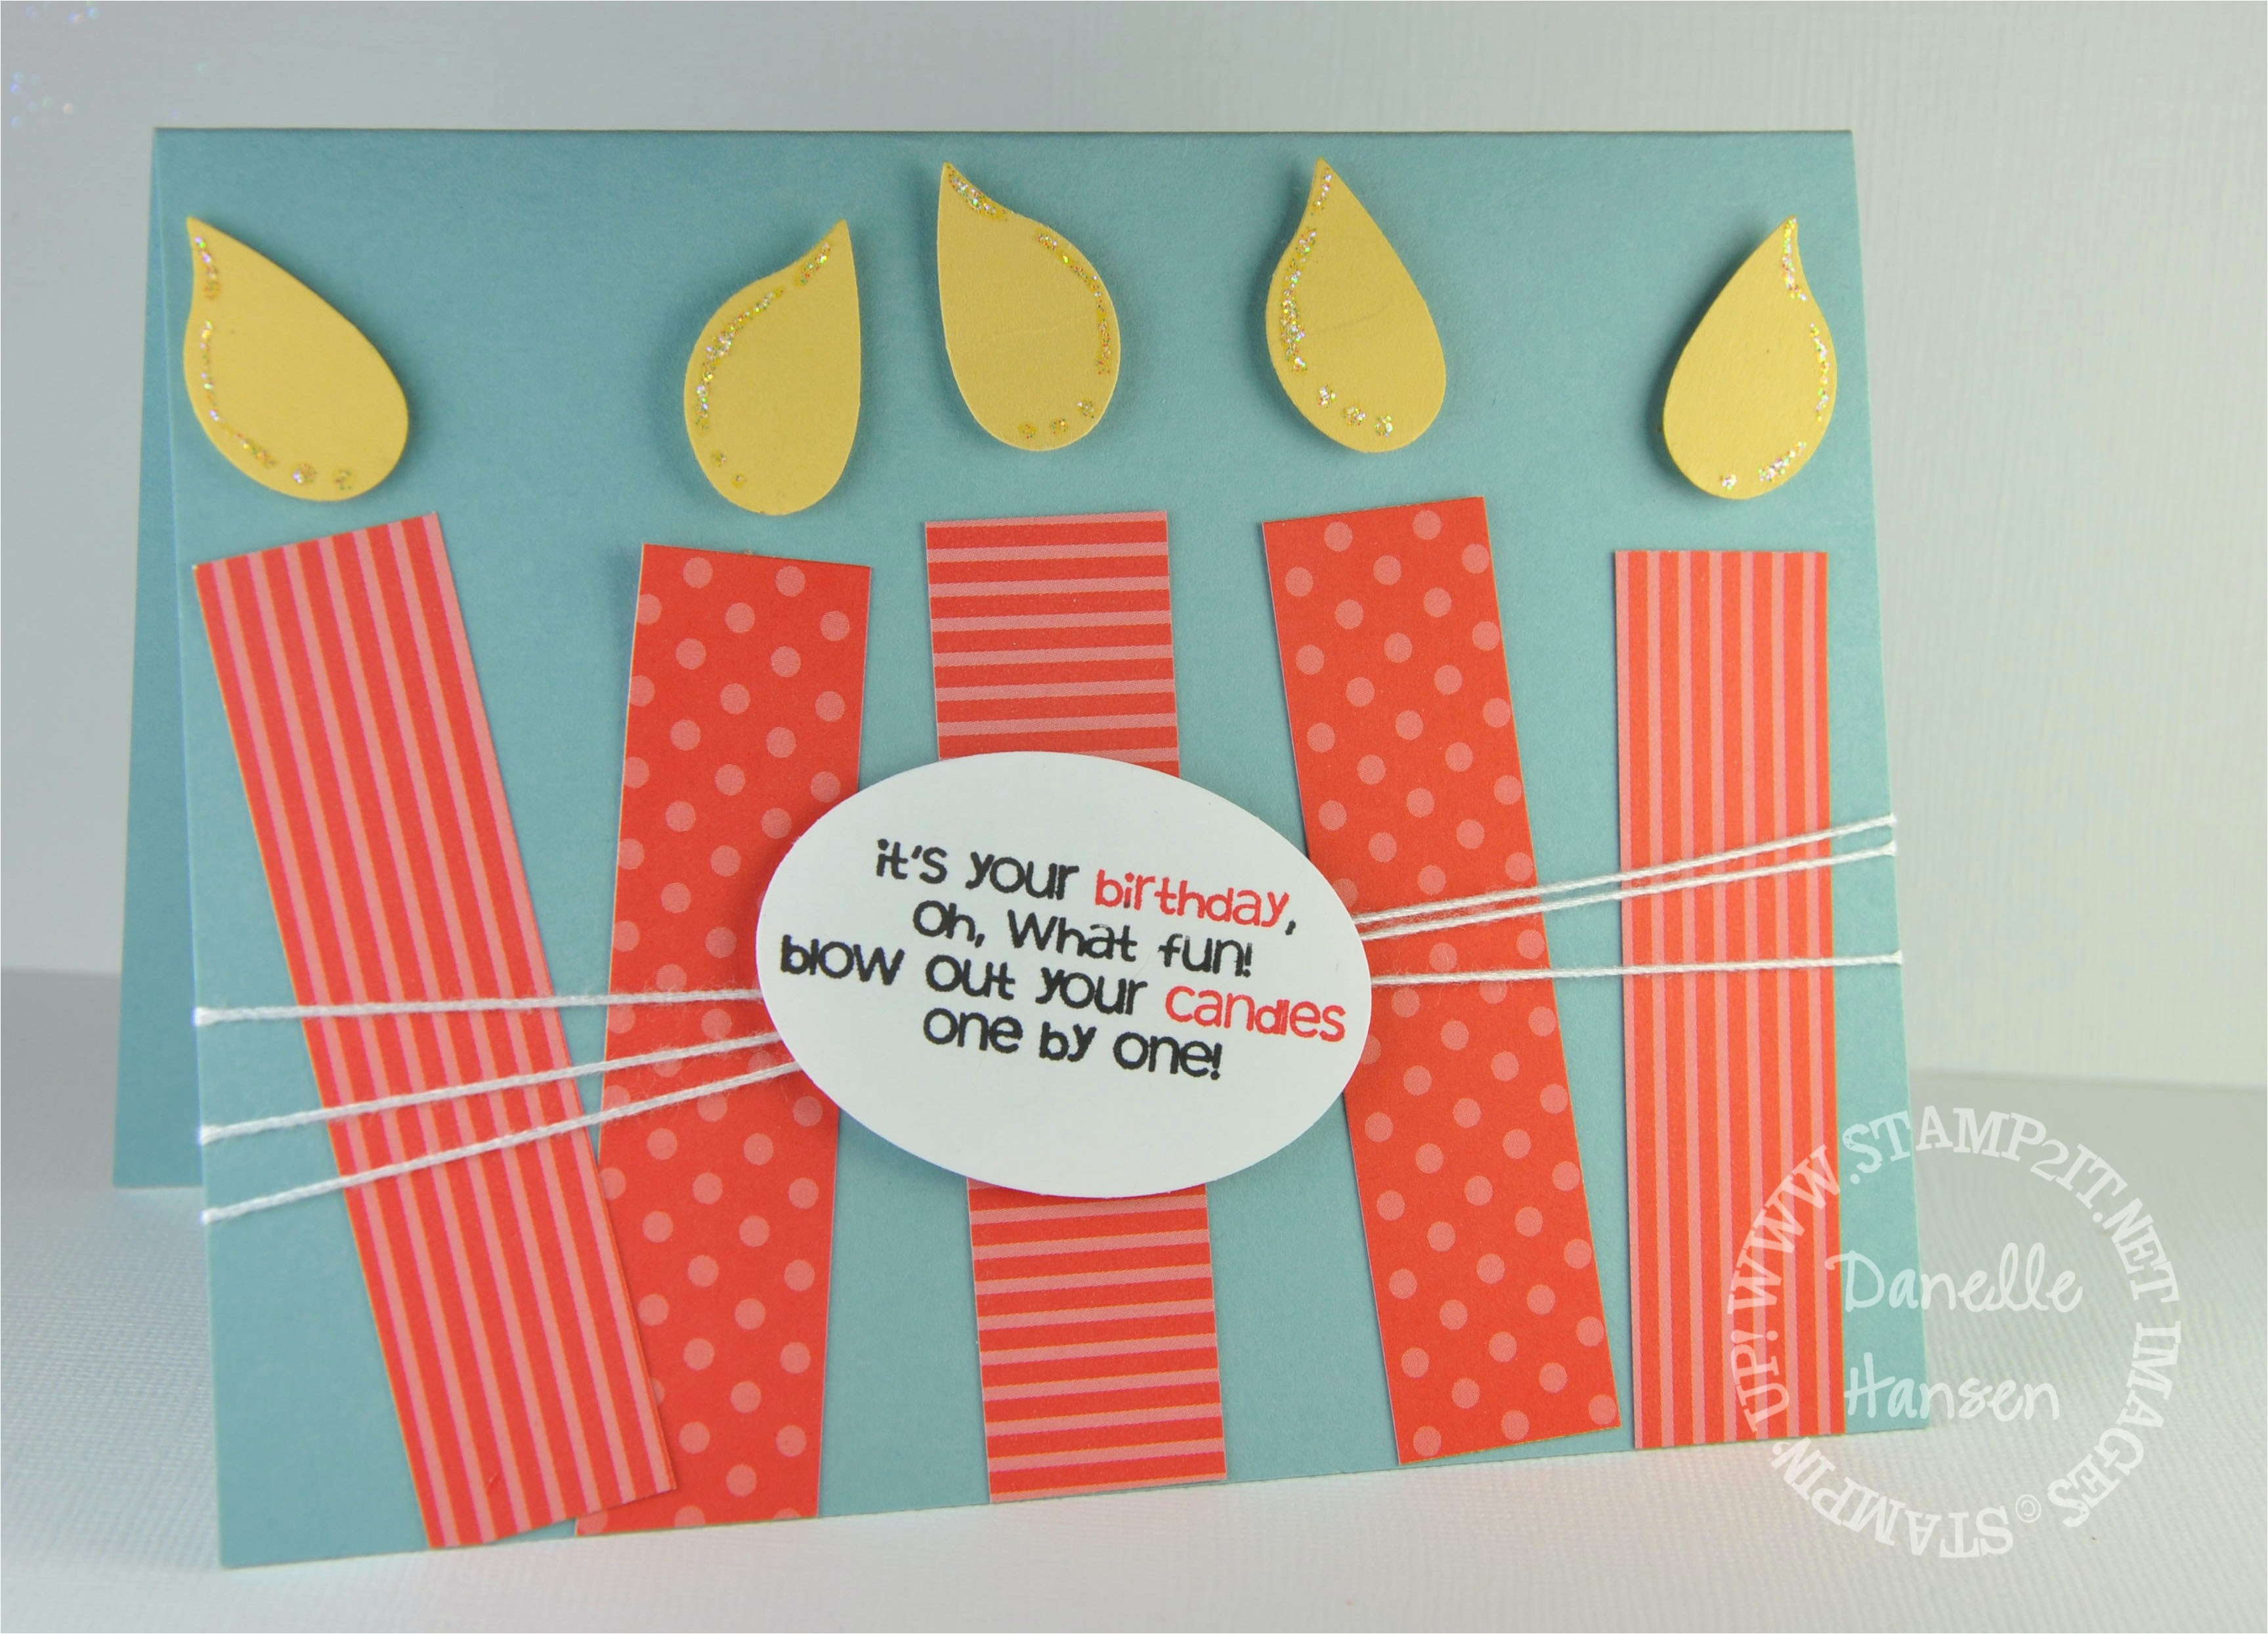 Handmade Cards Ideas For Birthday Diy Birthday Cards For Husband Creative Handmade Birthday Card Ideas